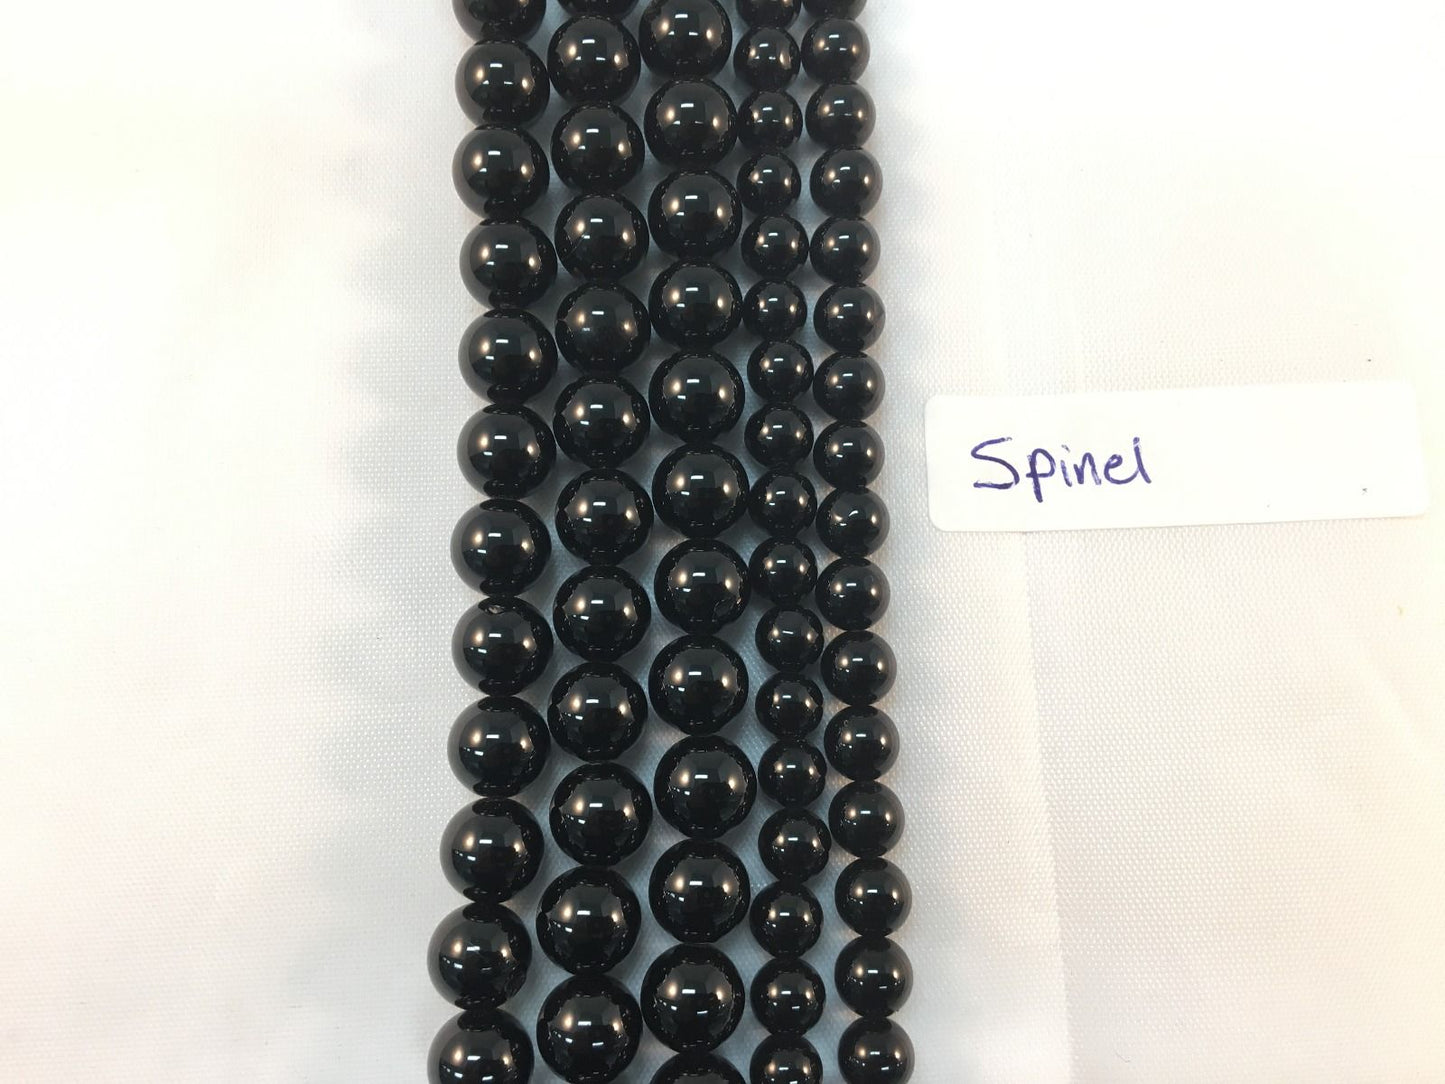 Natural Black Spinel Beads 8mm